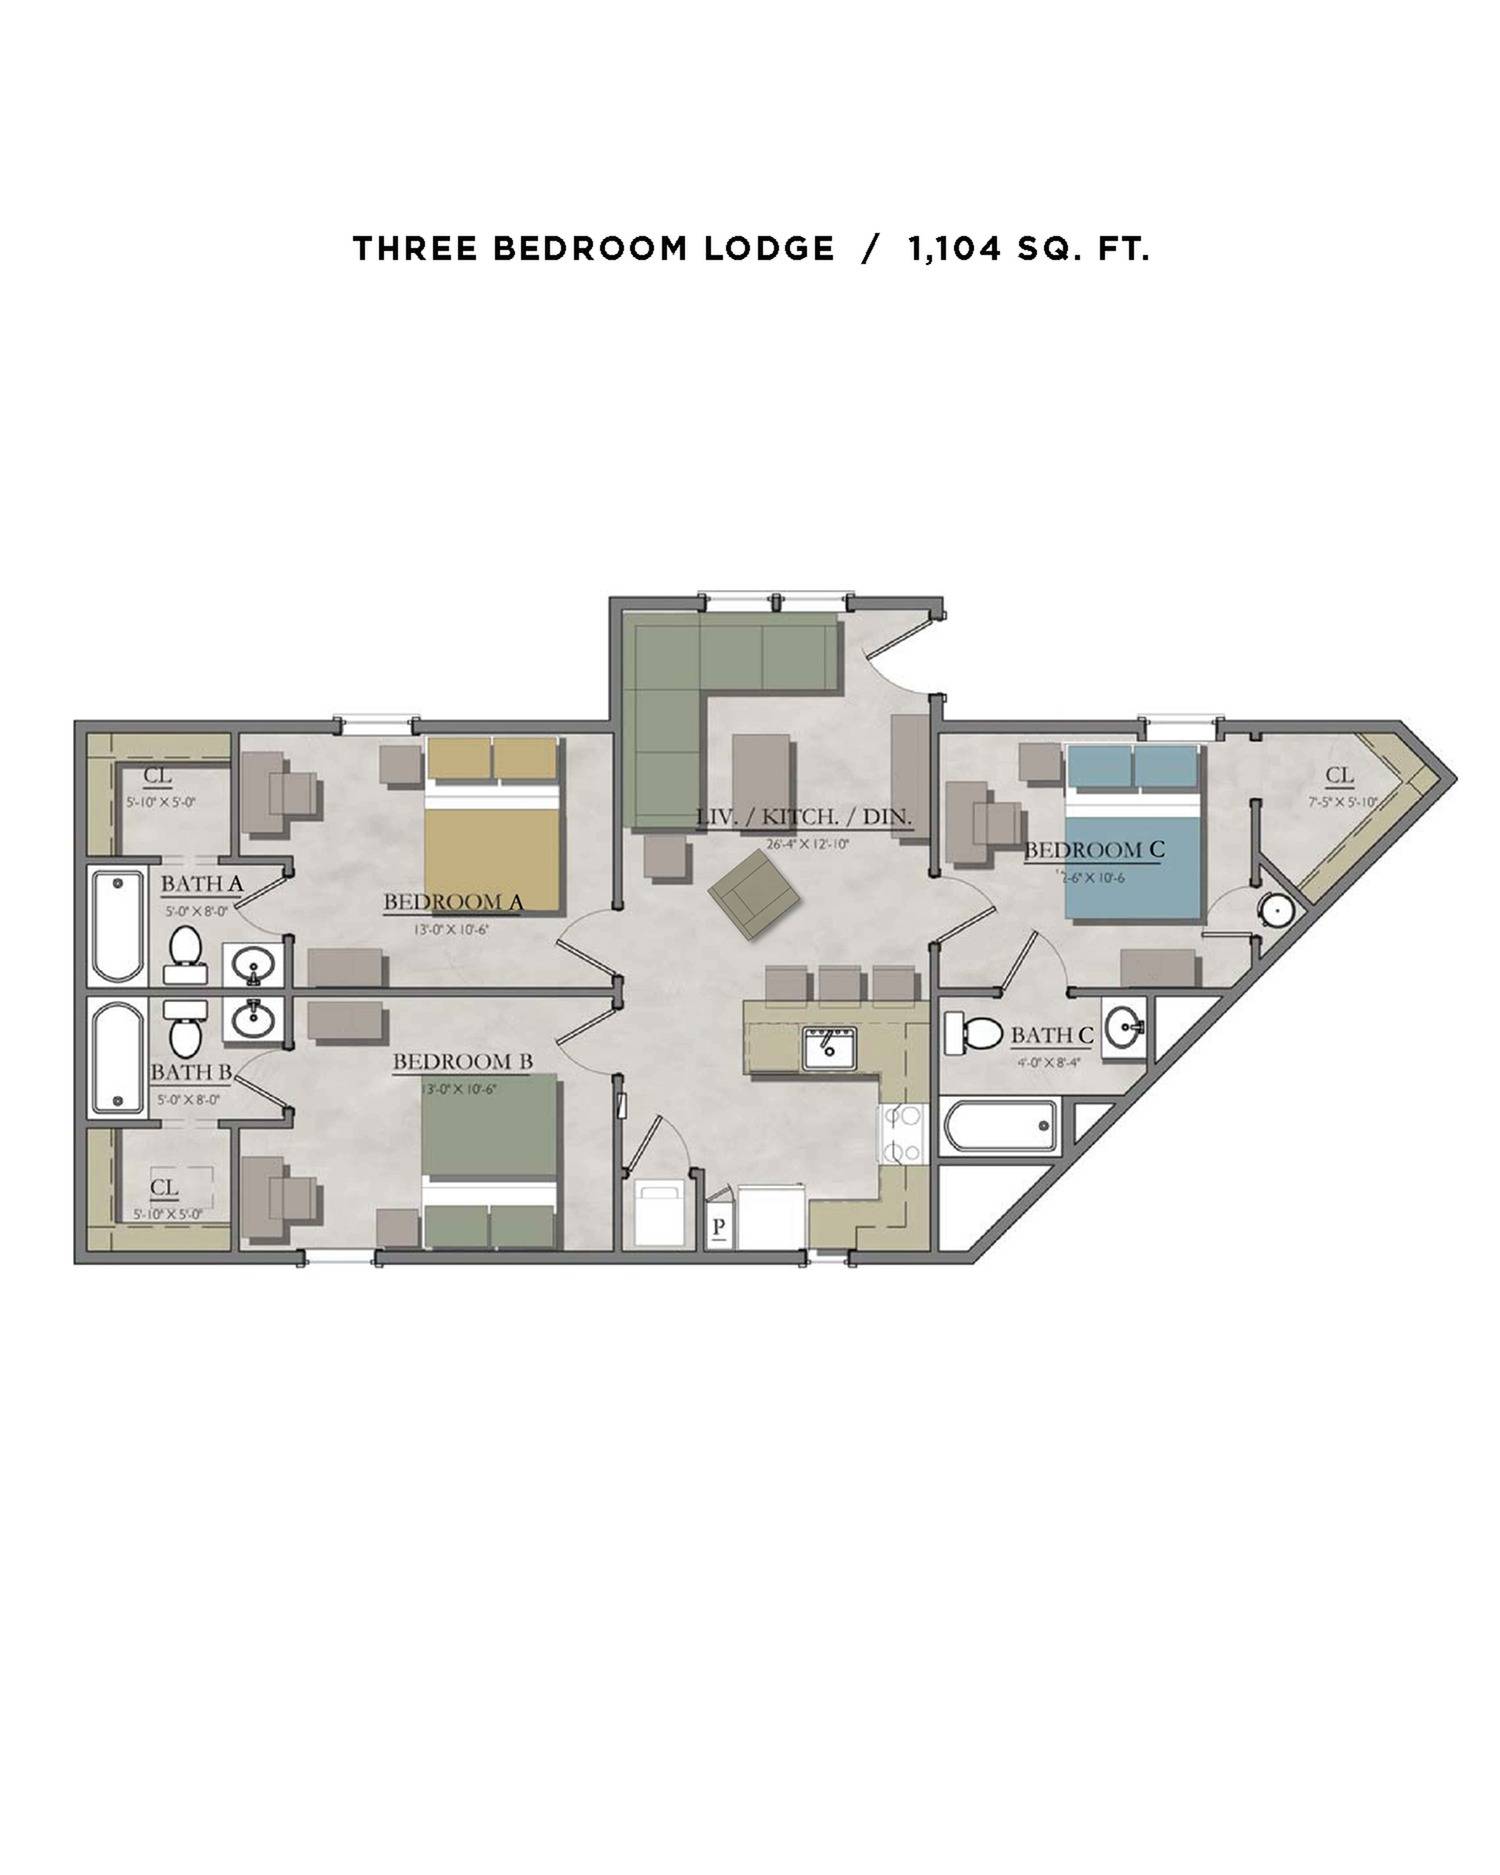 3 bedroom lodge